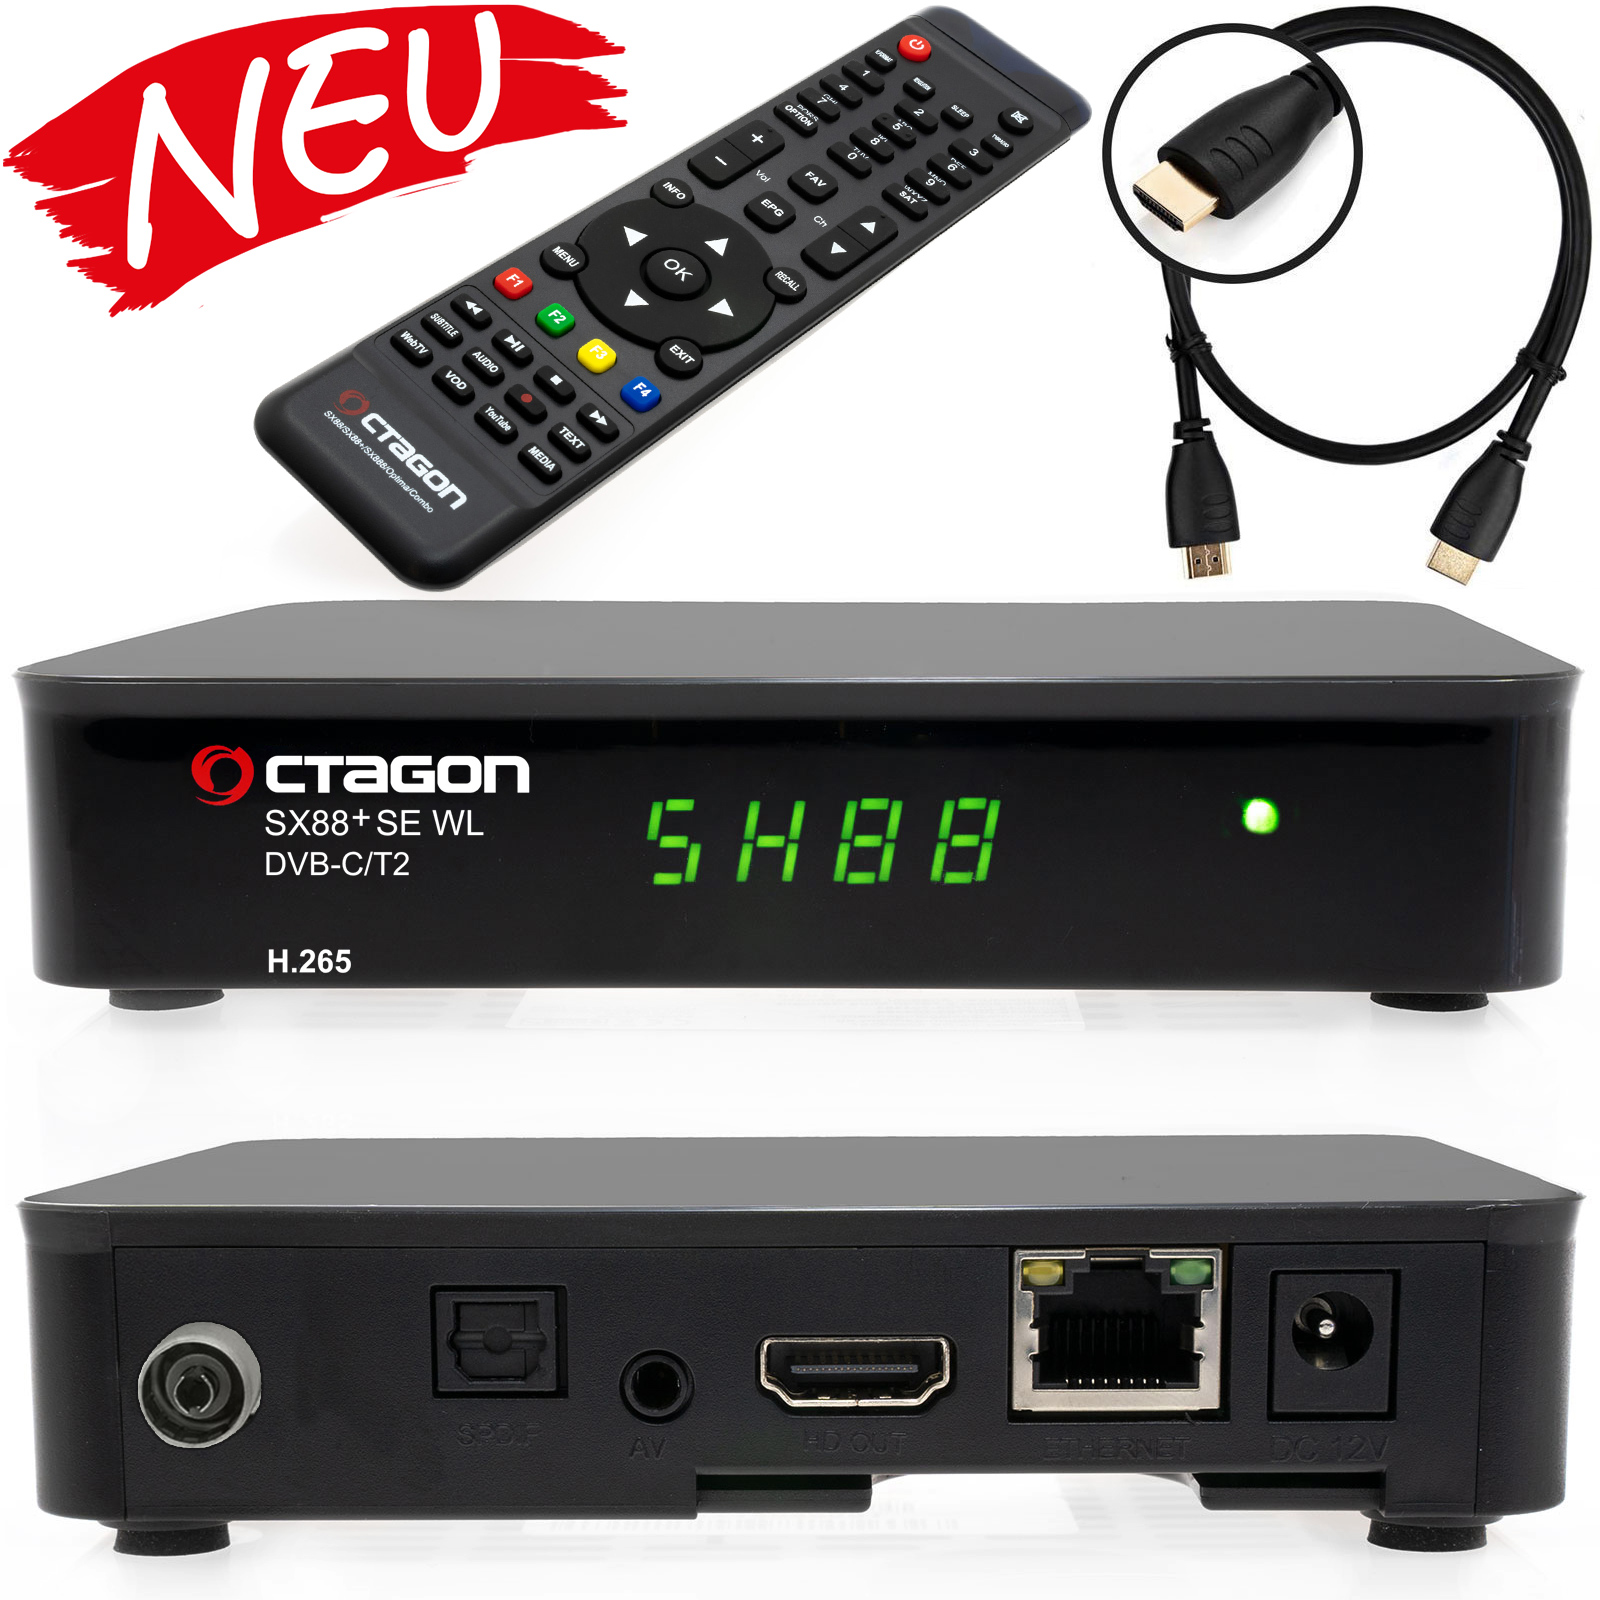 Octagon SX88+ SE H265 Multistream HD Kabel Receiver DVB-C/T2 mit Wlan